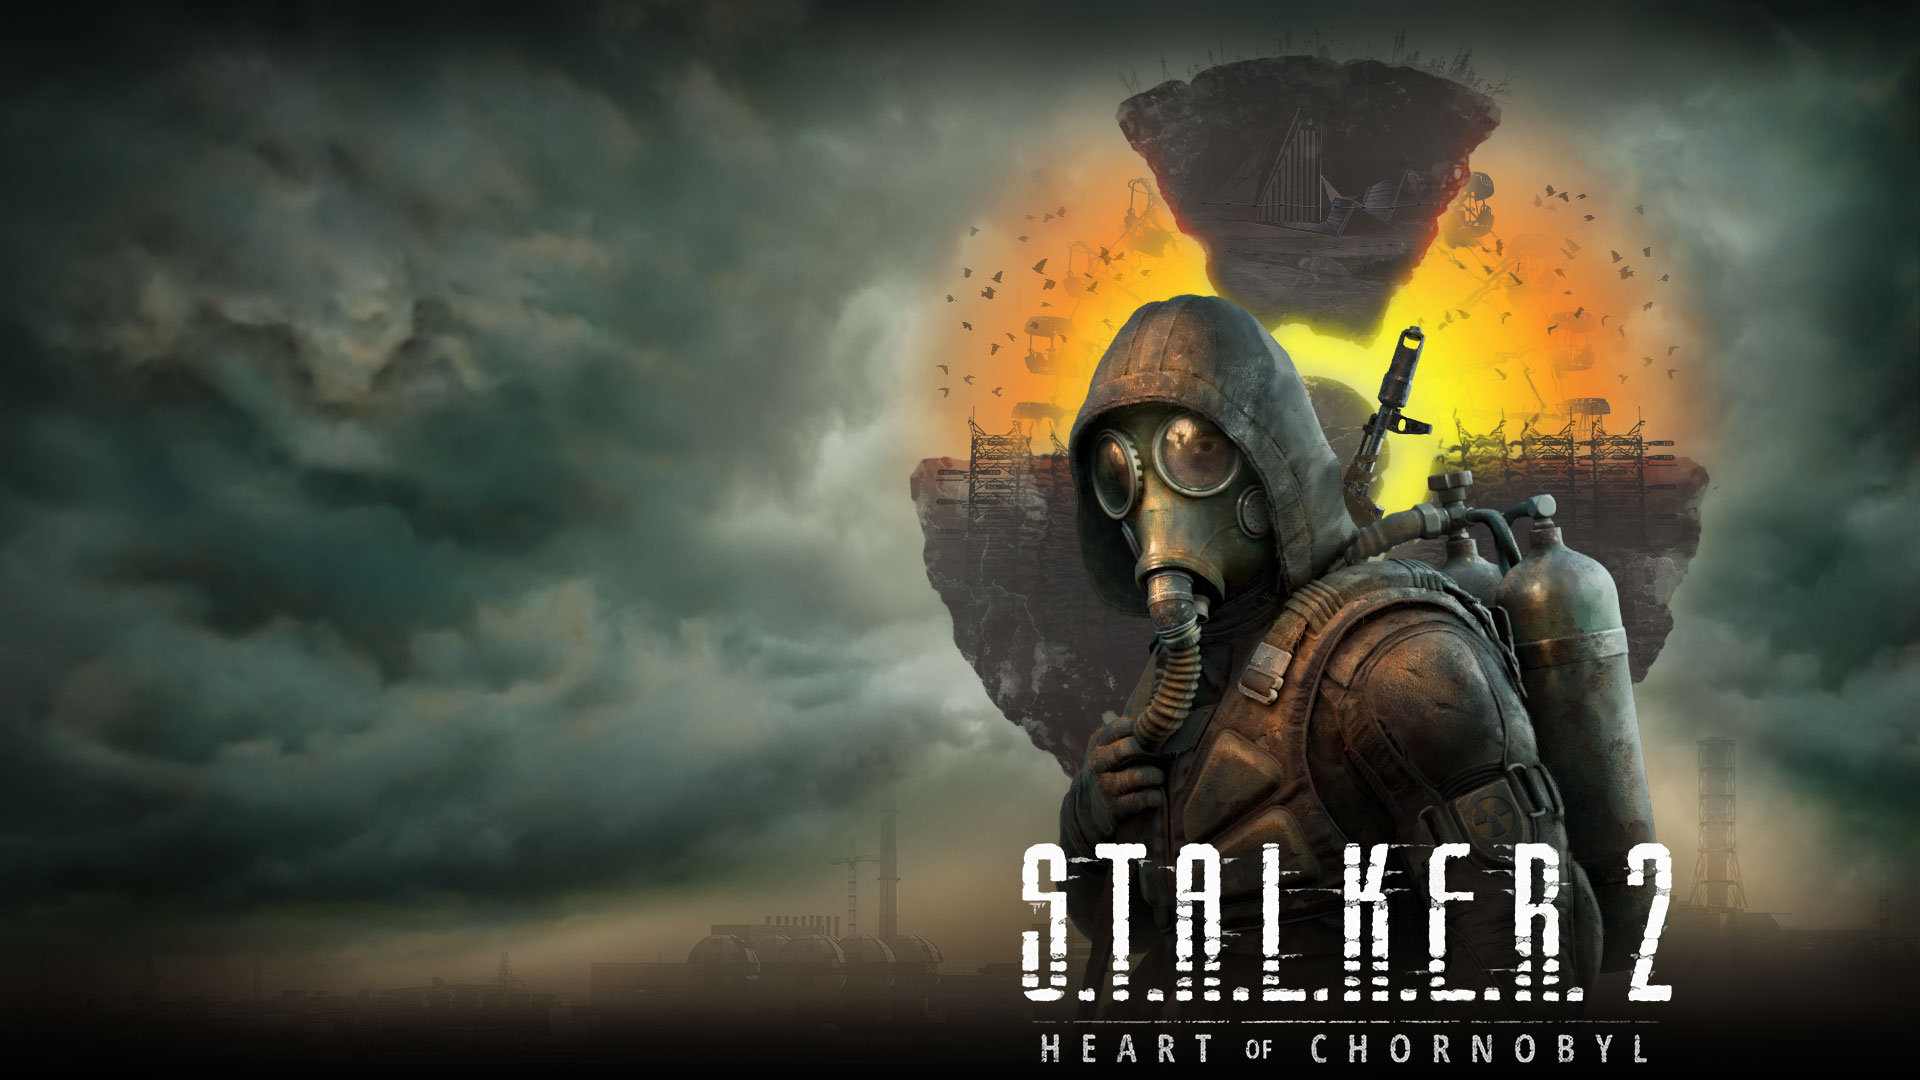 Stalker 2 Heart of Chornobyl, ένας χαρακτήρας στέκεται μπροστά από ένα αιωρούμενο τοπίο με σύννεφα και καπνό στην ατμόσφαιρα.